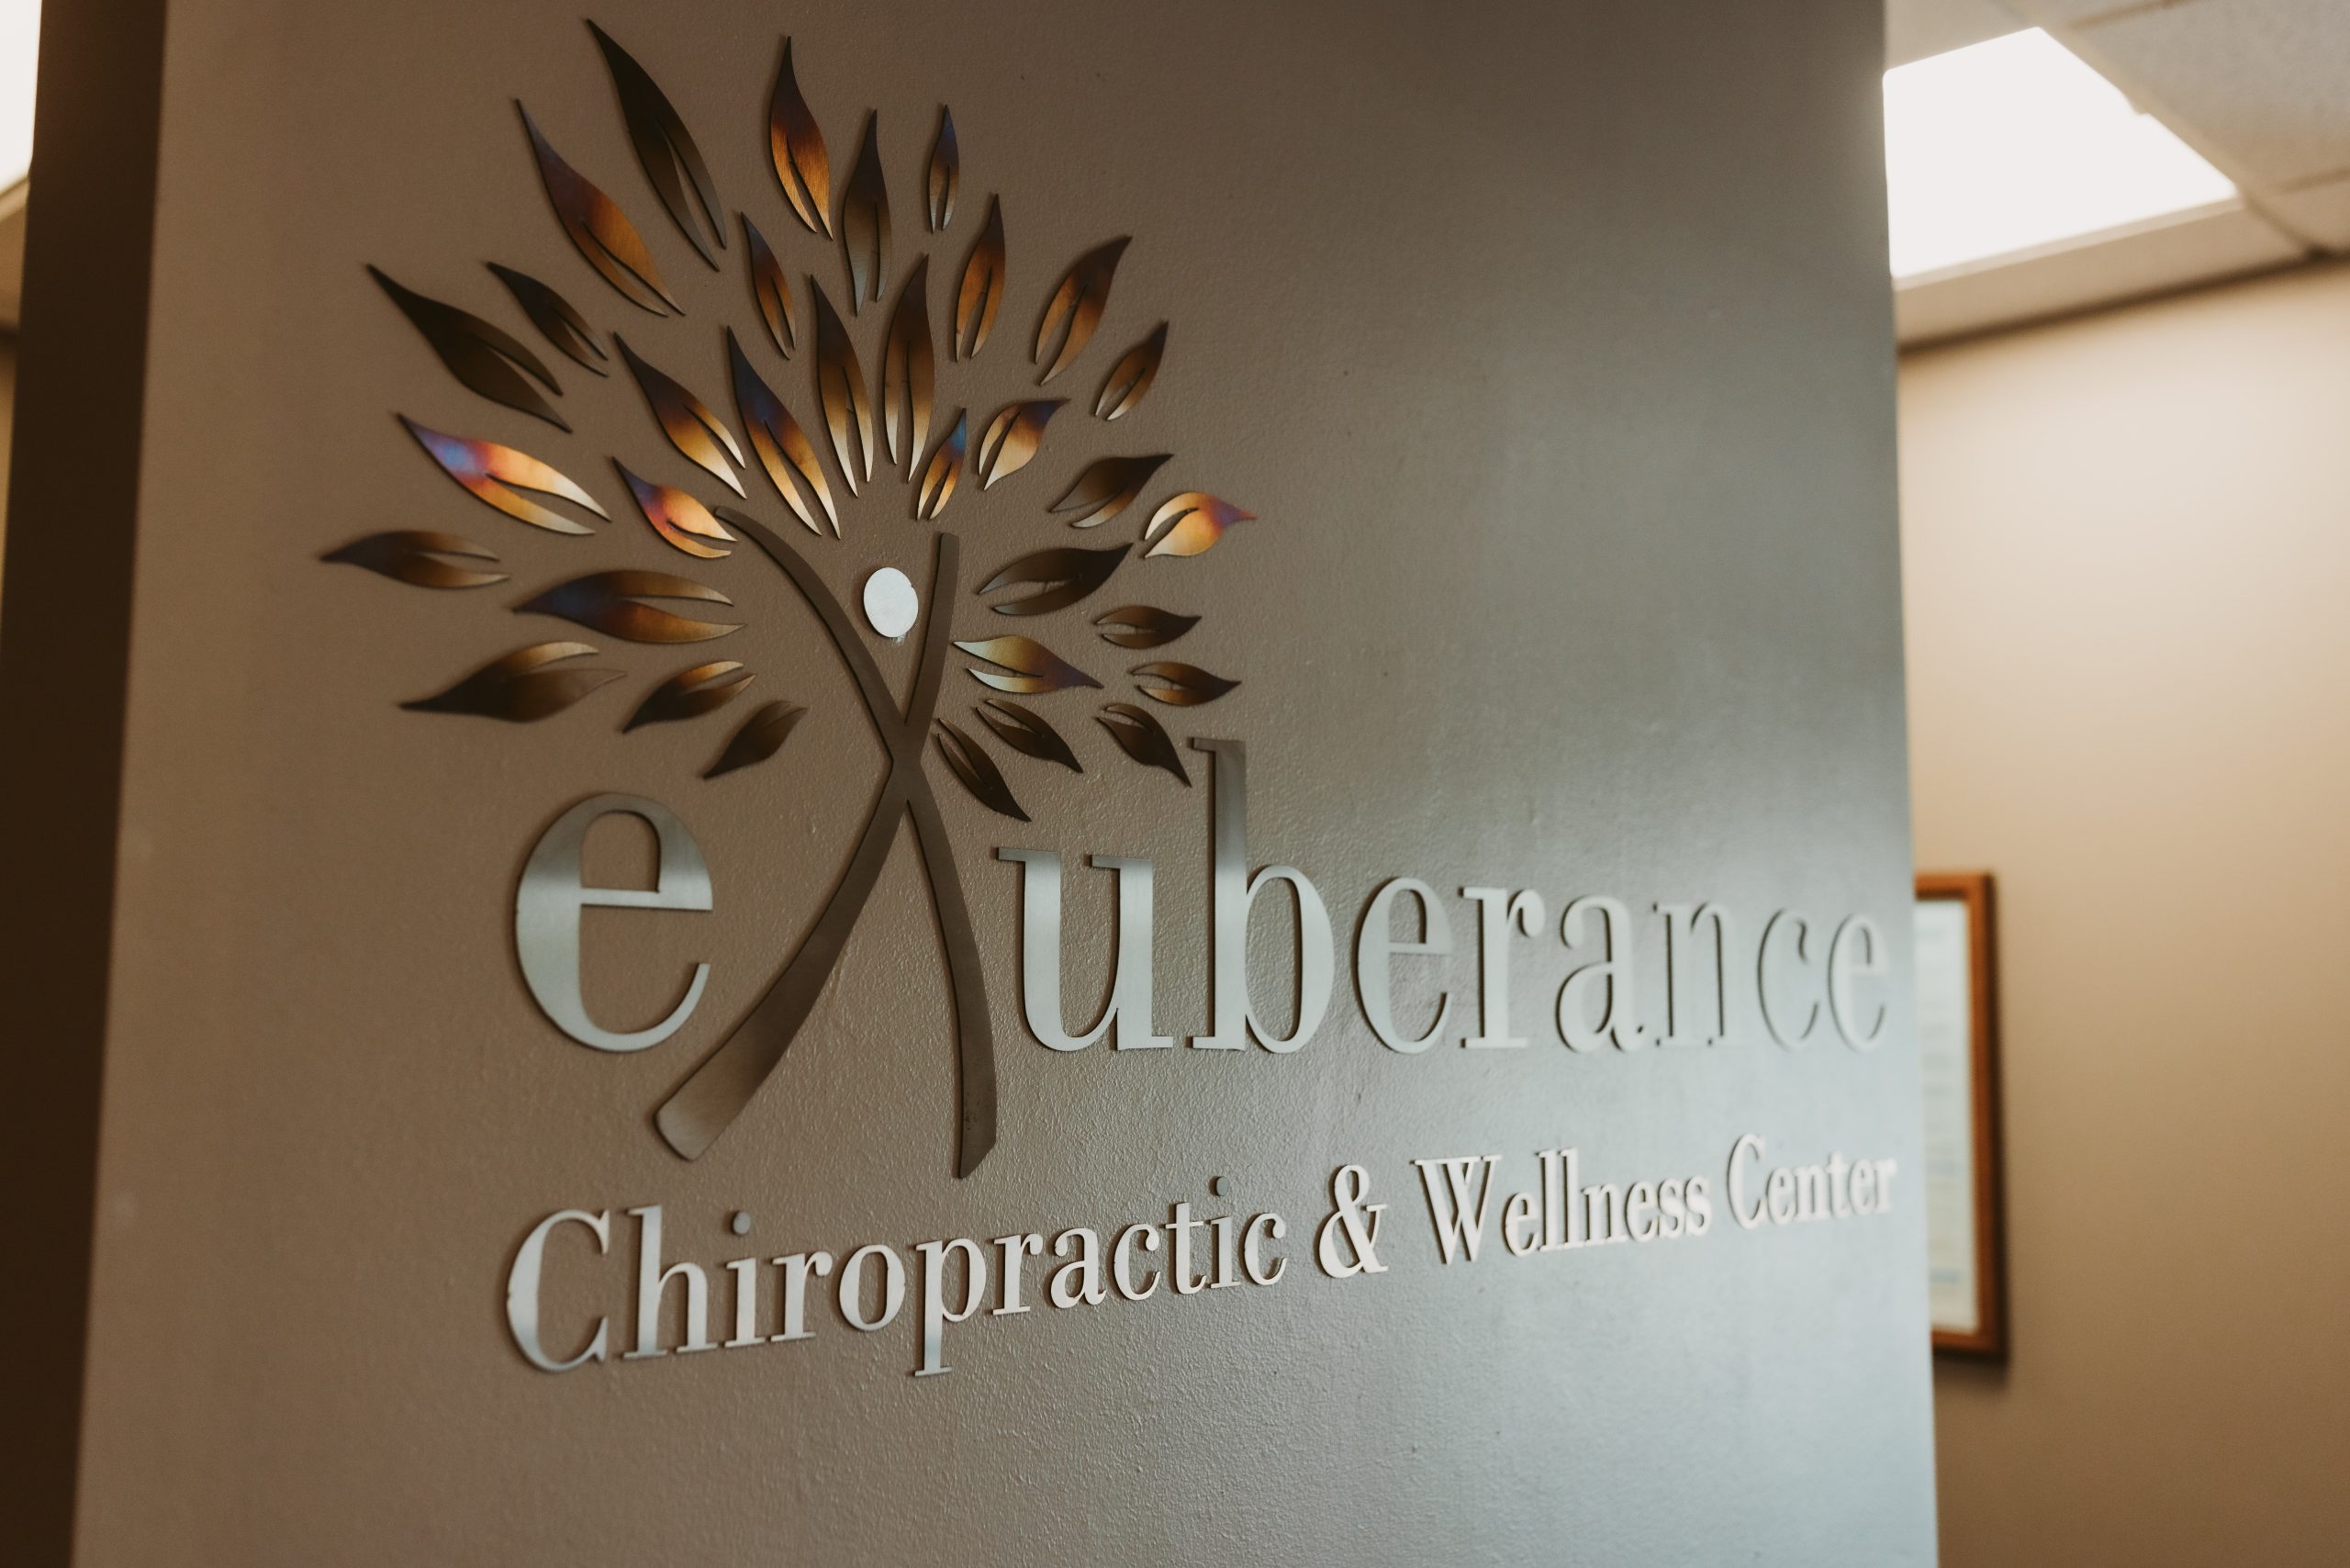 Photo of Exuberance Chiropractic & Wellness Center Sign Logo